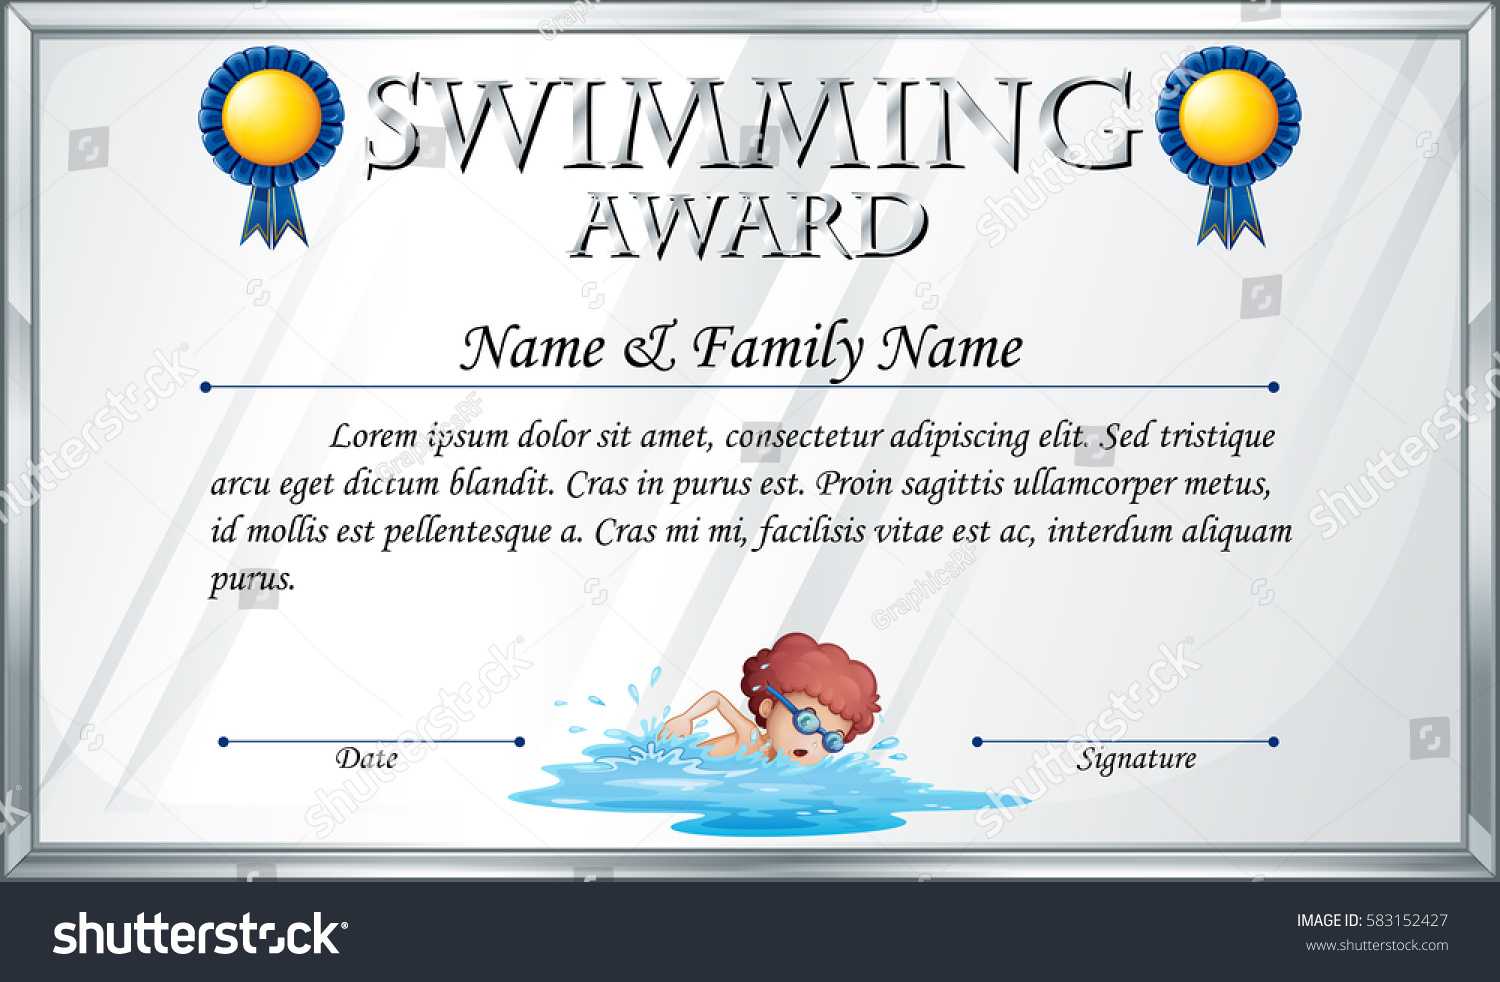 Certificate Template Swimming Award Illustration Stock In Swimming Award Certificate Template